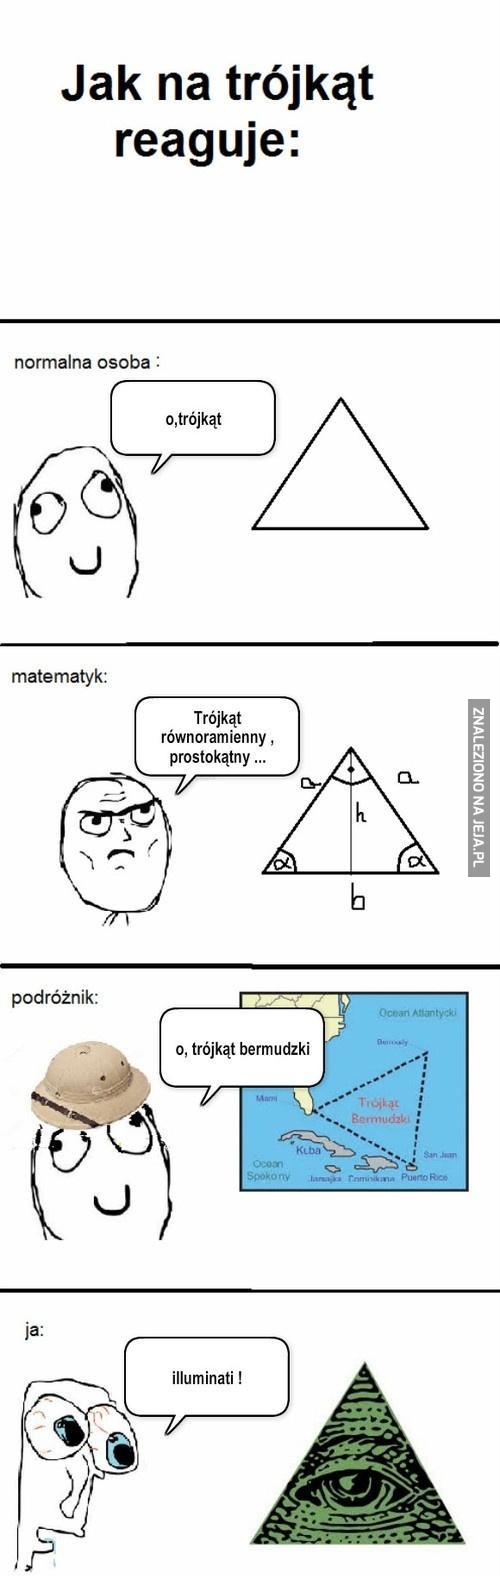 Reakcja na trójkąt? Illuminati!